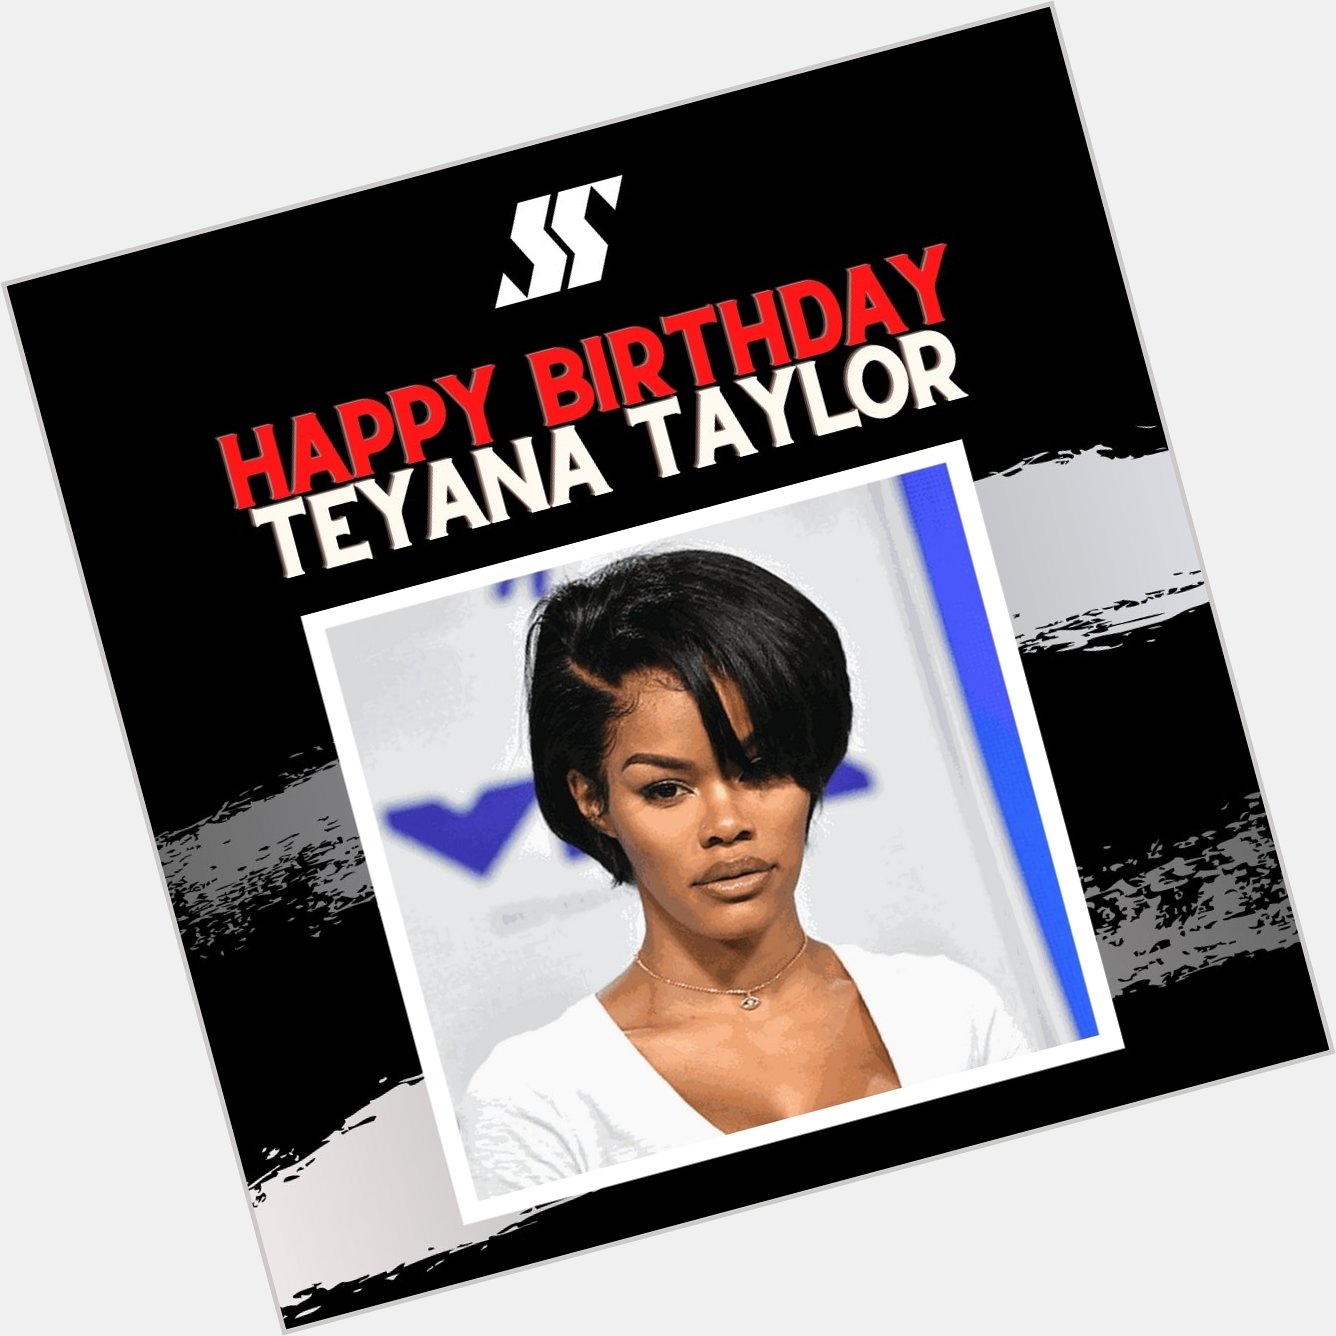 Happy birthday Teyana Taylor   Fav song by her 